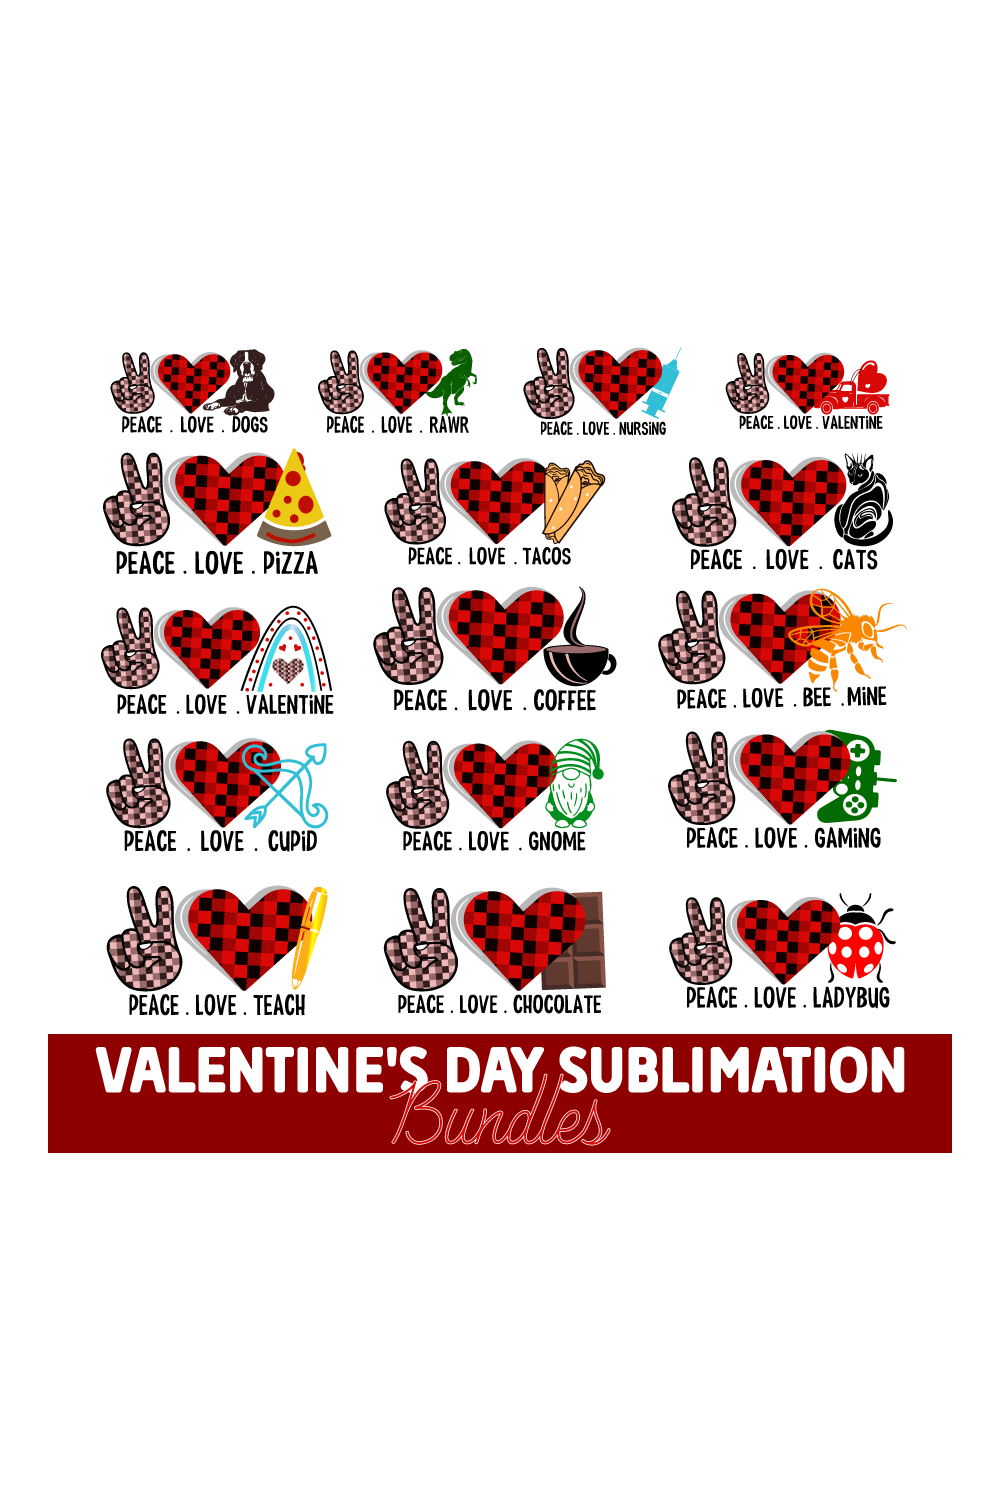 Valentine's Day Sublimation Backgrounds Design pinterest image.